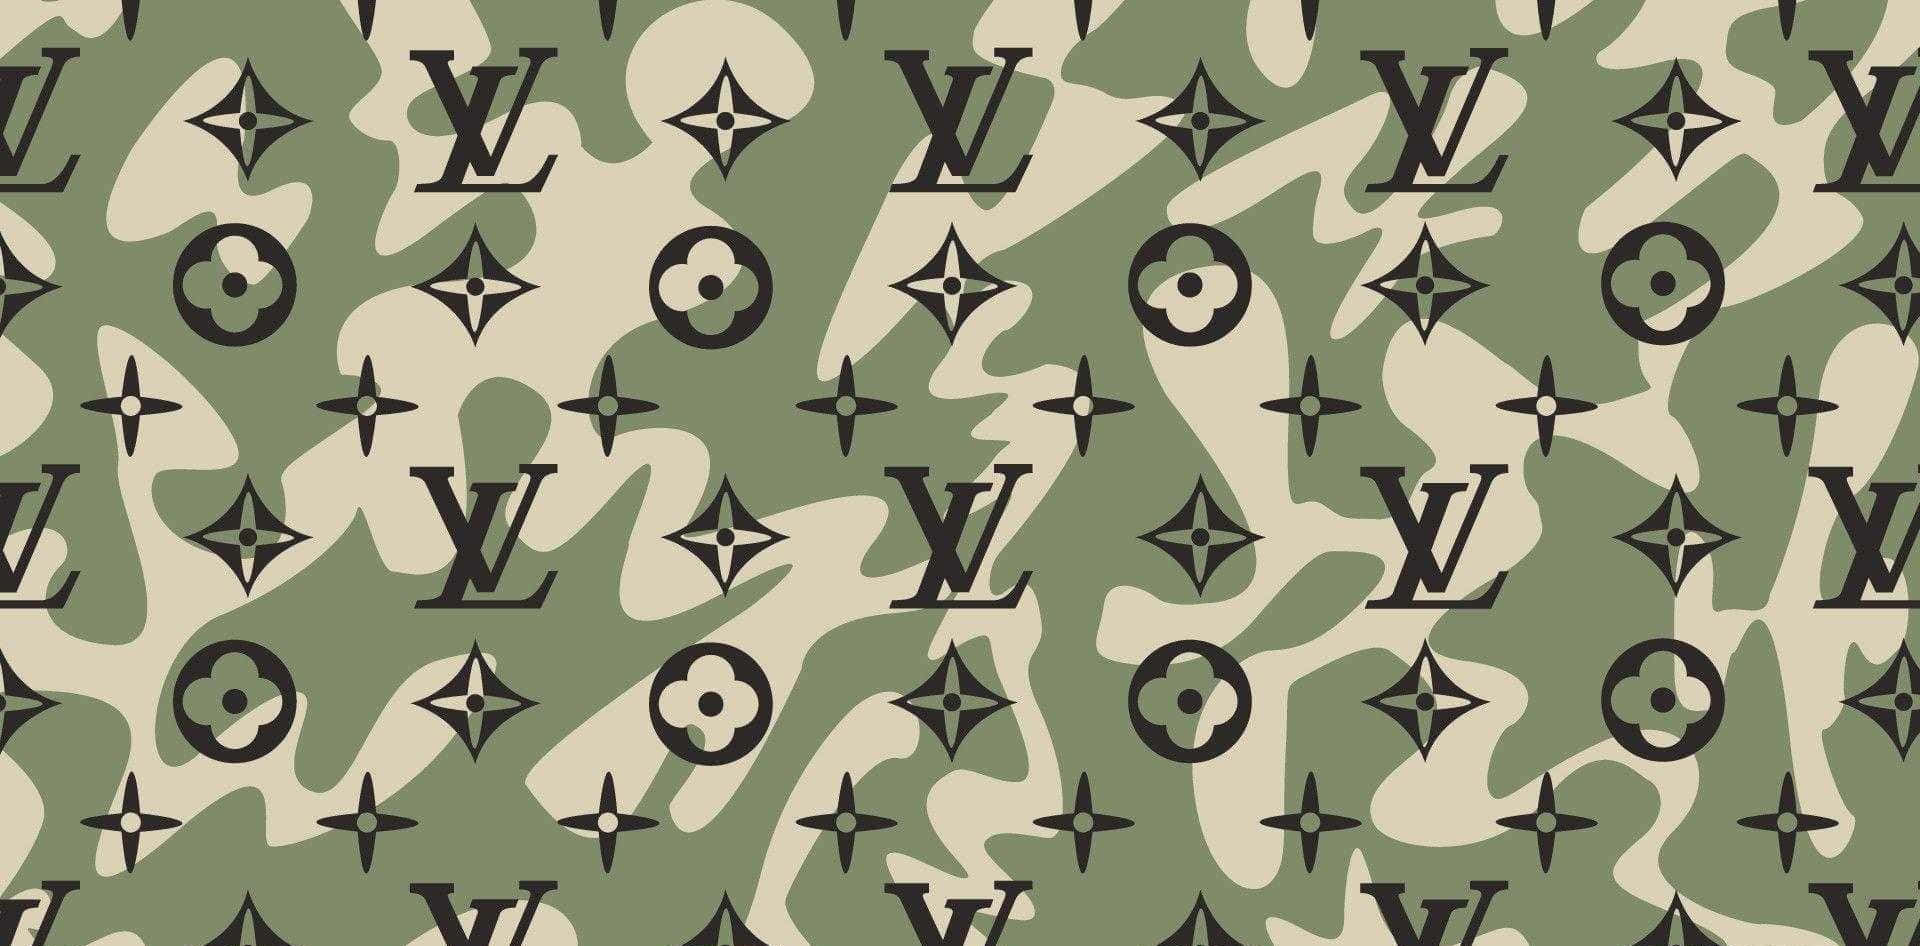 Download Louis Vuitton Logo Green Background Wallpaper